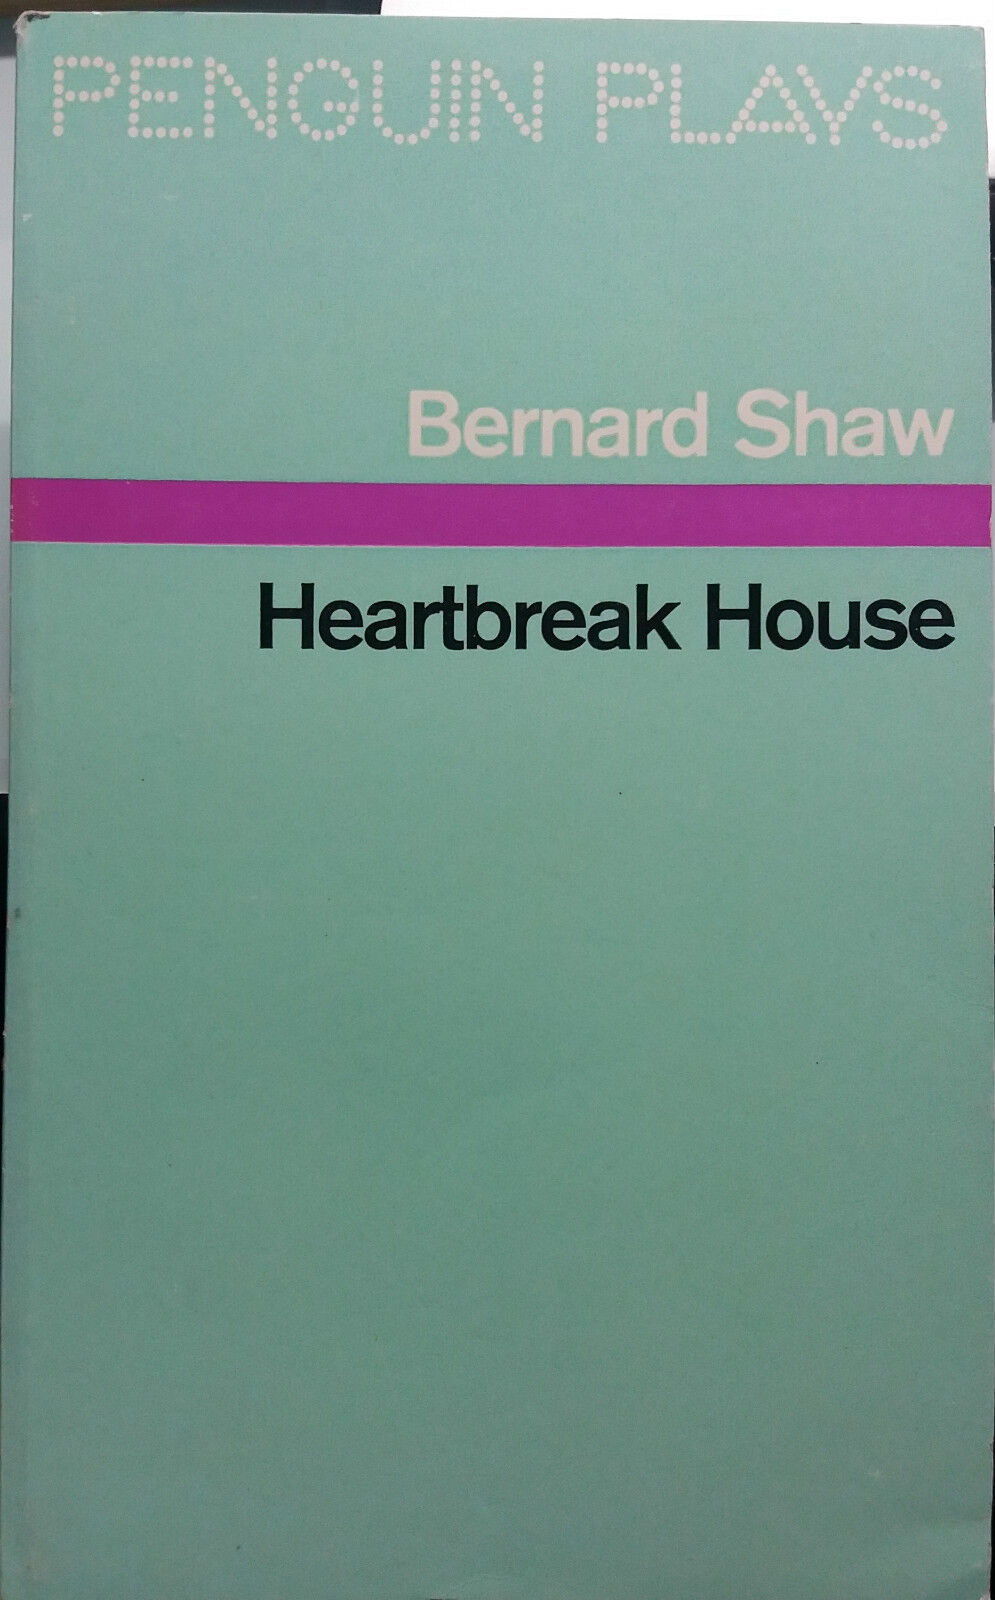 Heartbreak House - Bernard Shaw - Penguin Books - 1965 - G libro usato